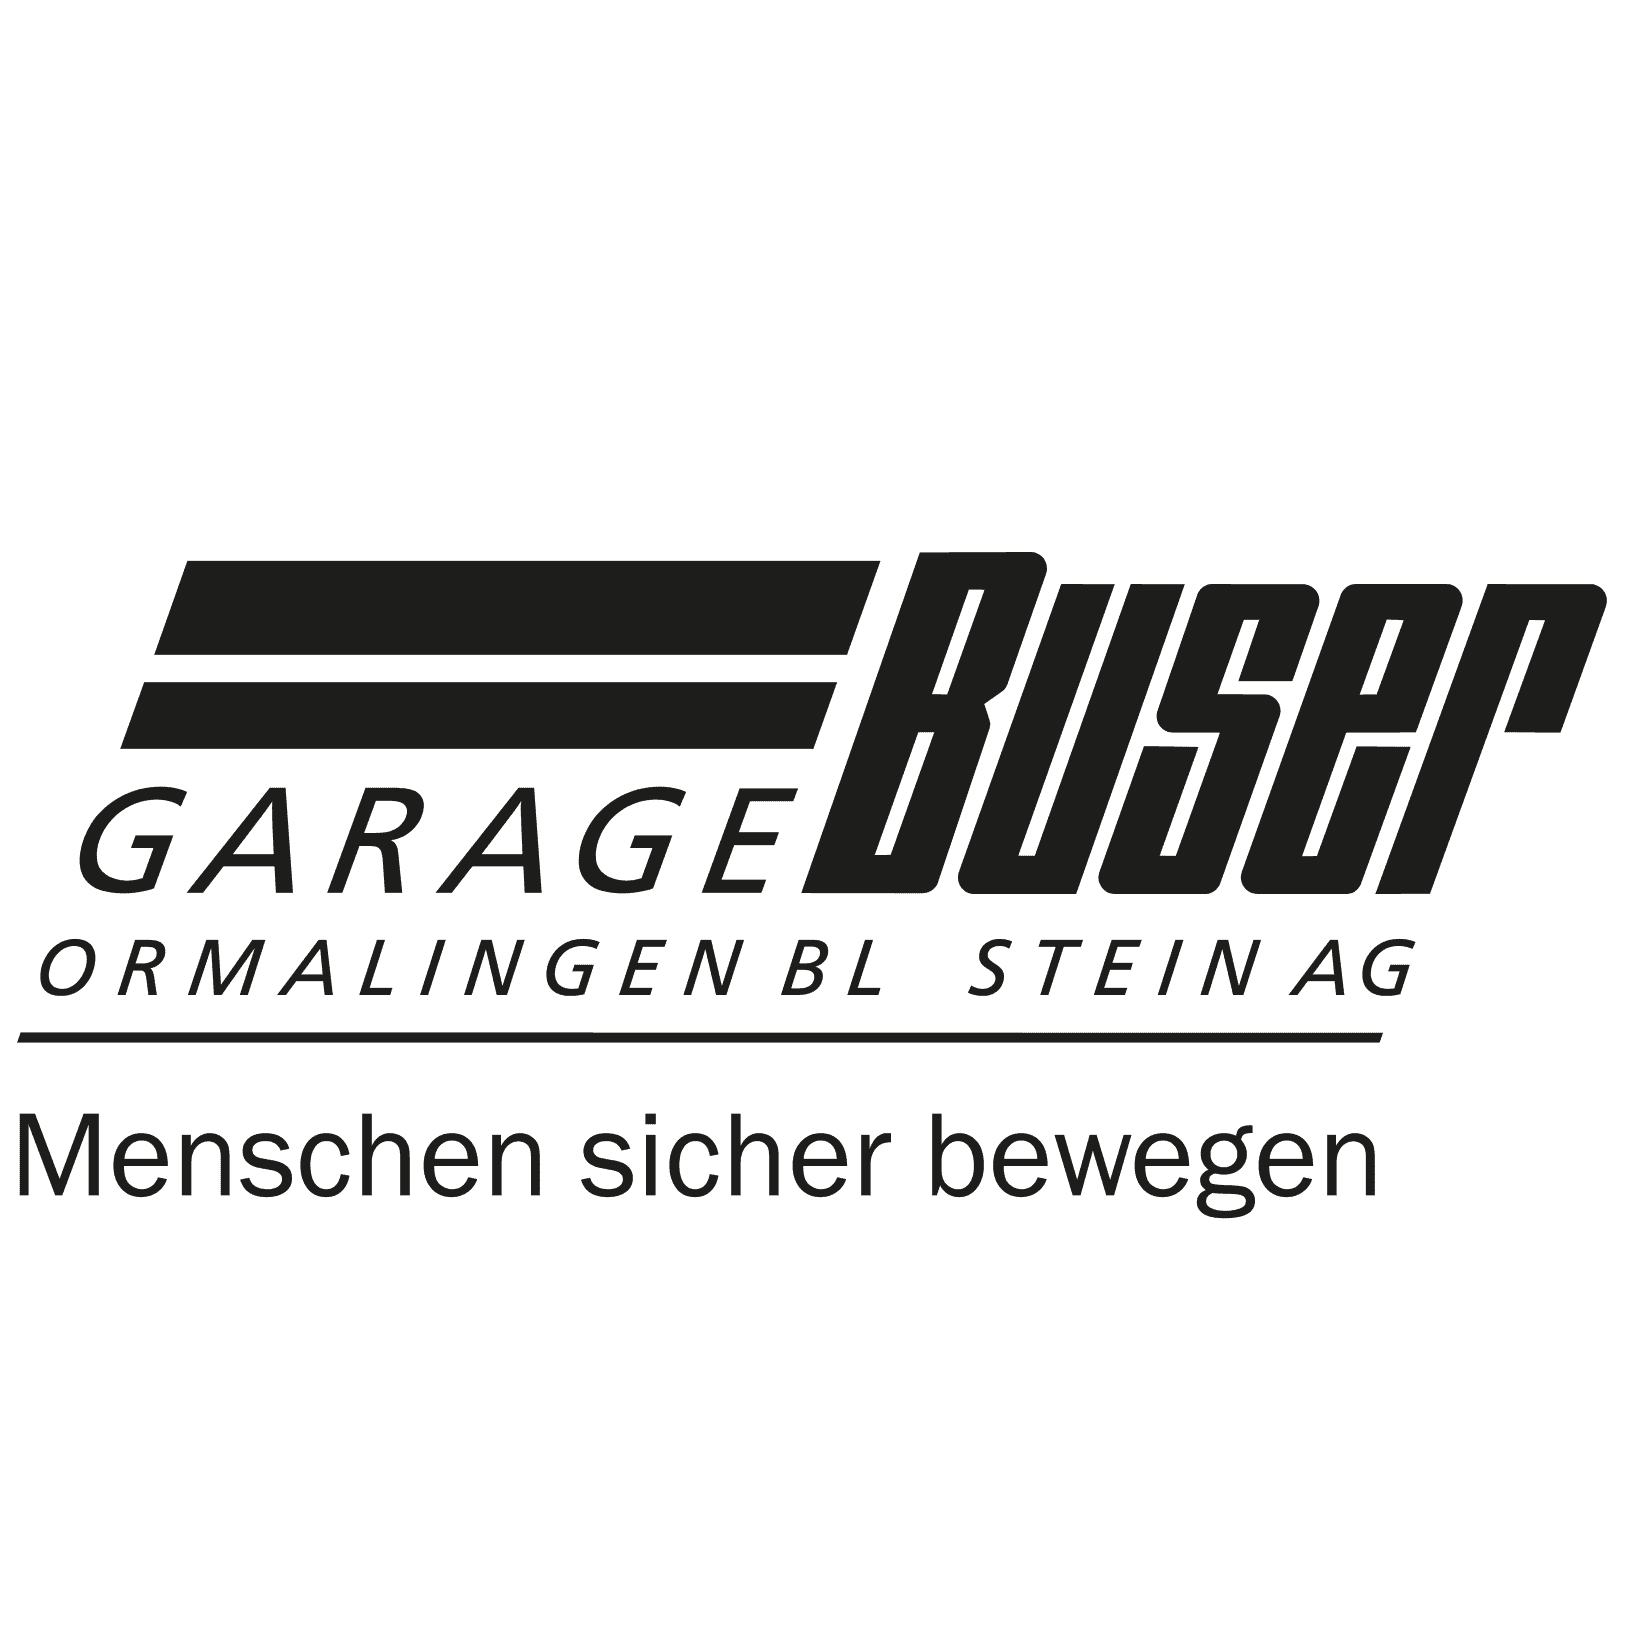 Ernst Buser AG Ormalingen